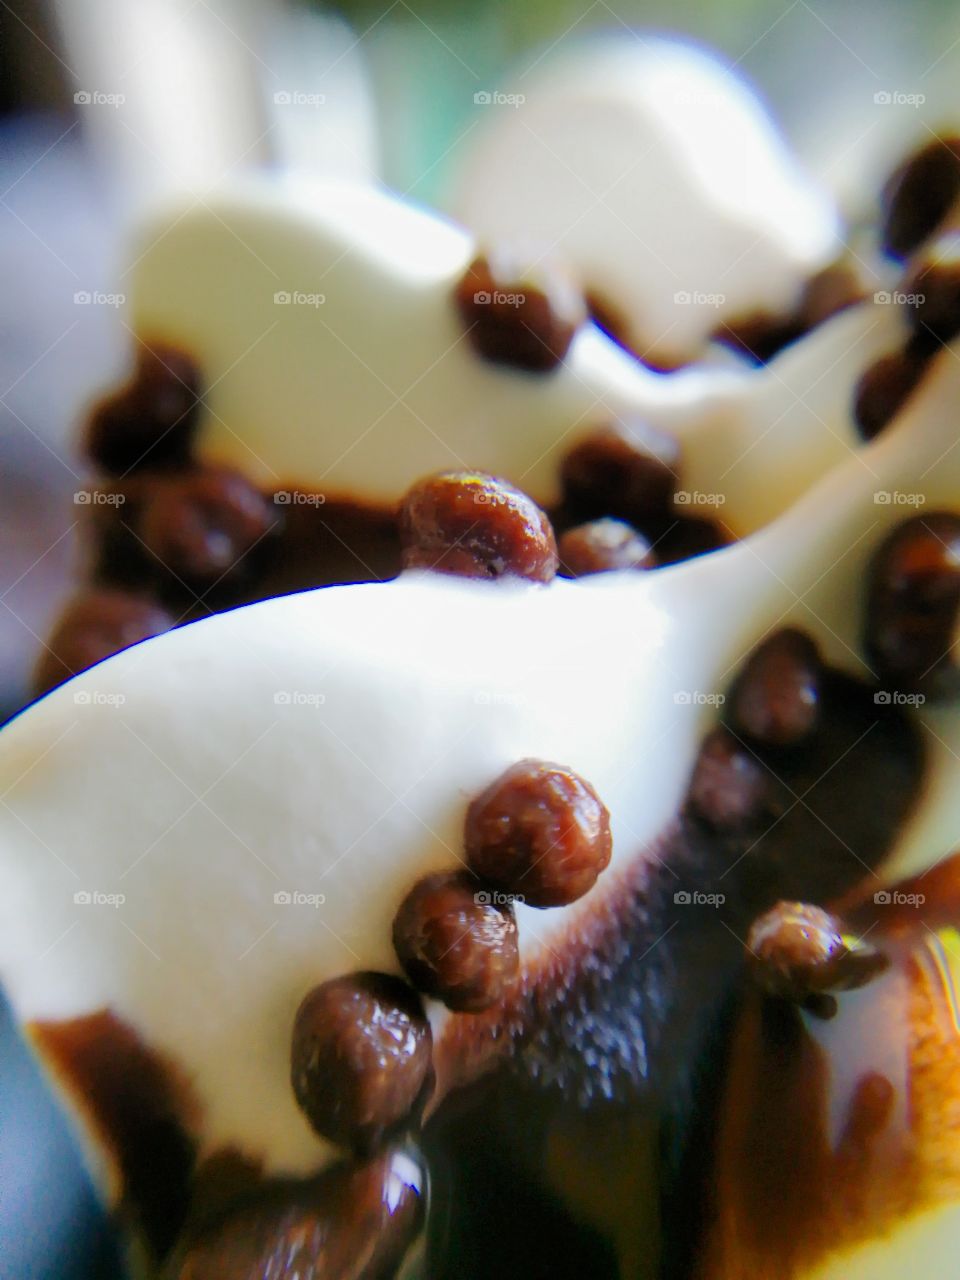 Close-up of chocolate chip ice cream